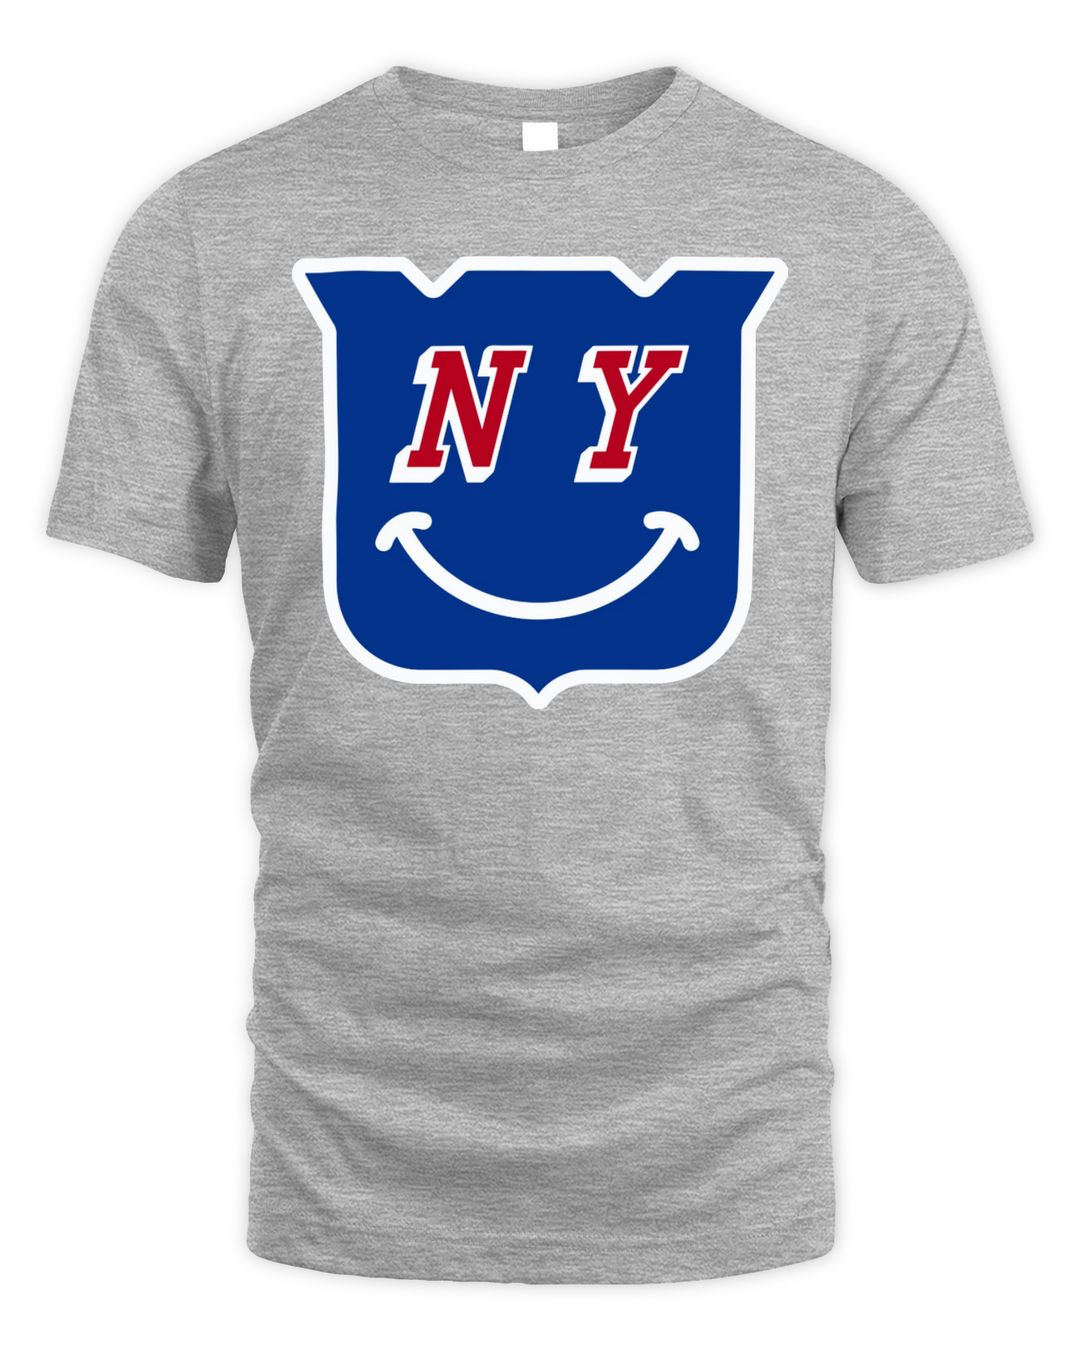 Blue York Merch Ny Smile Shirt